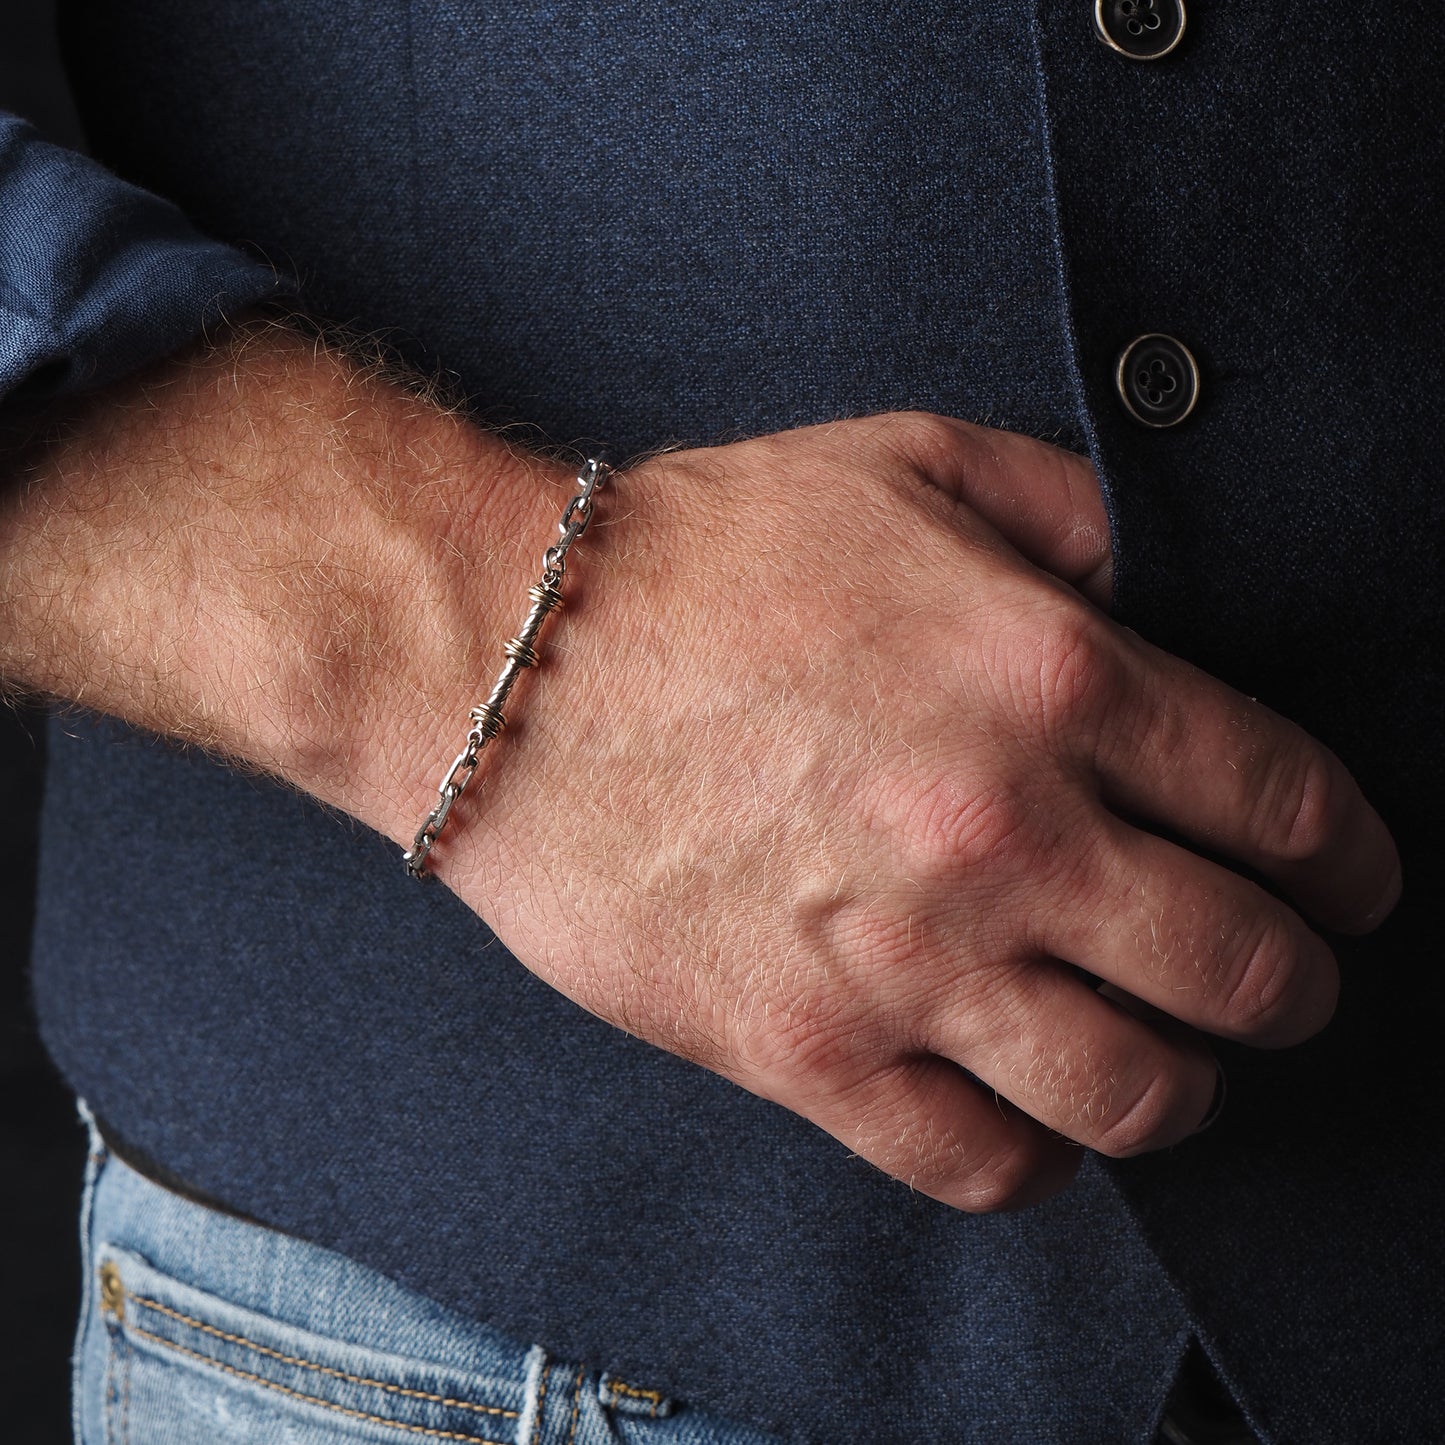 Lucky Knot Anchor Weave Bracelet with Unique Six Clasp - Symbolizes Good Fortune